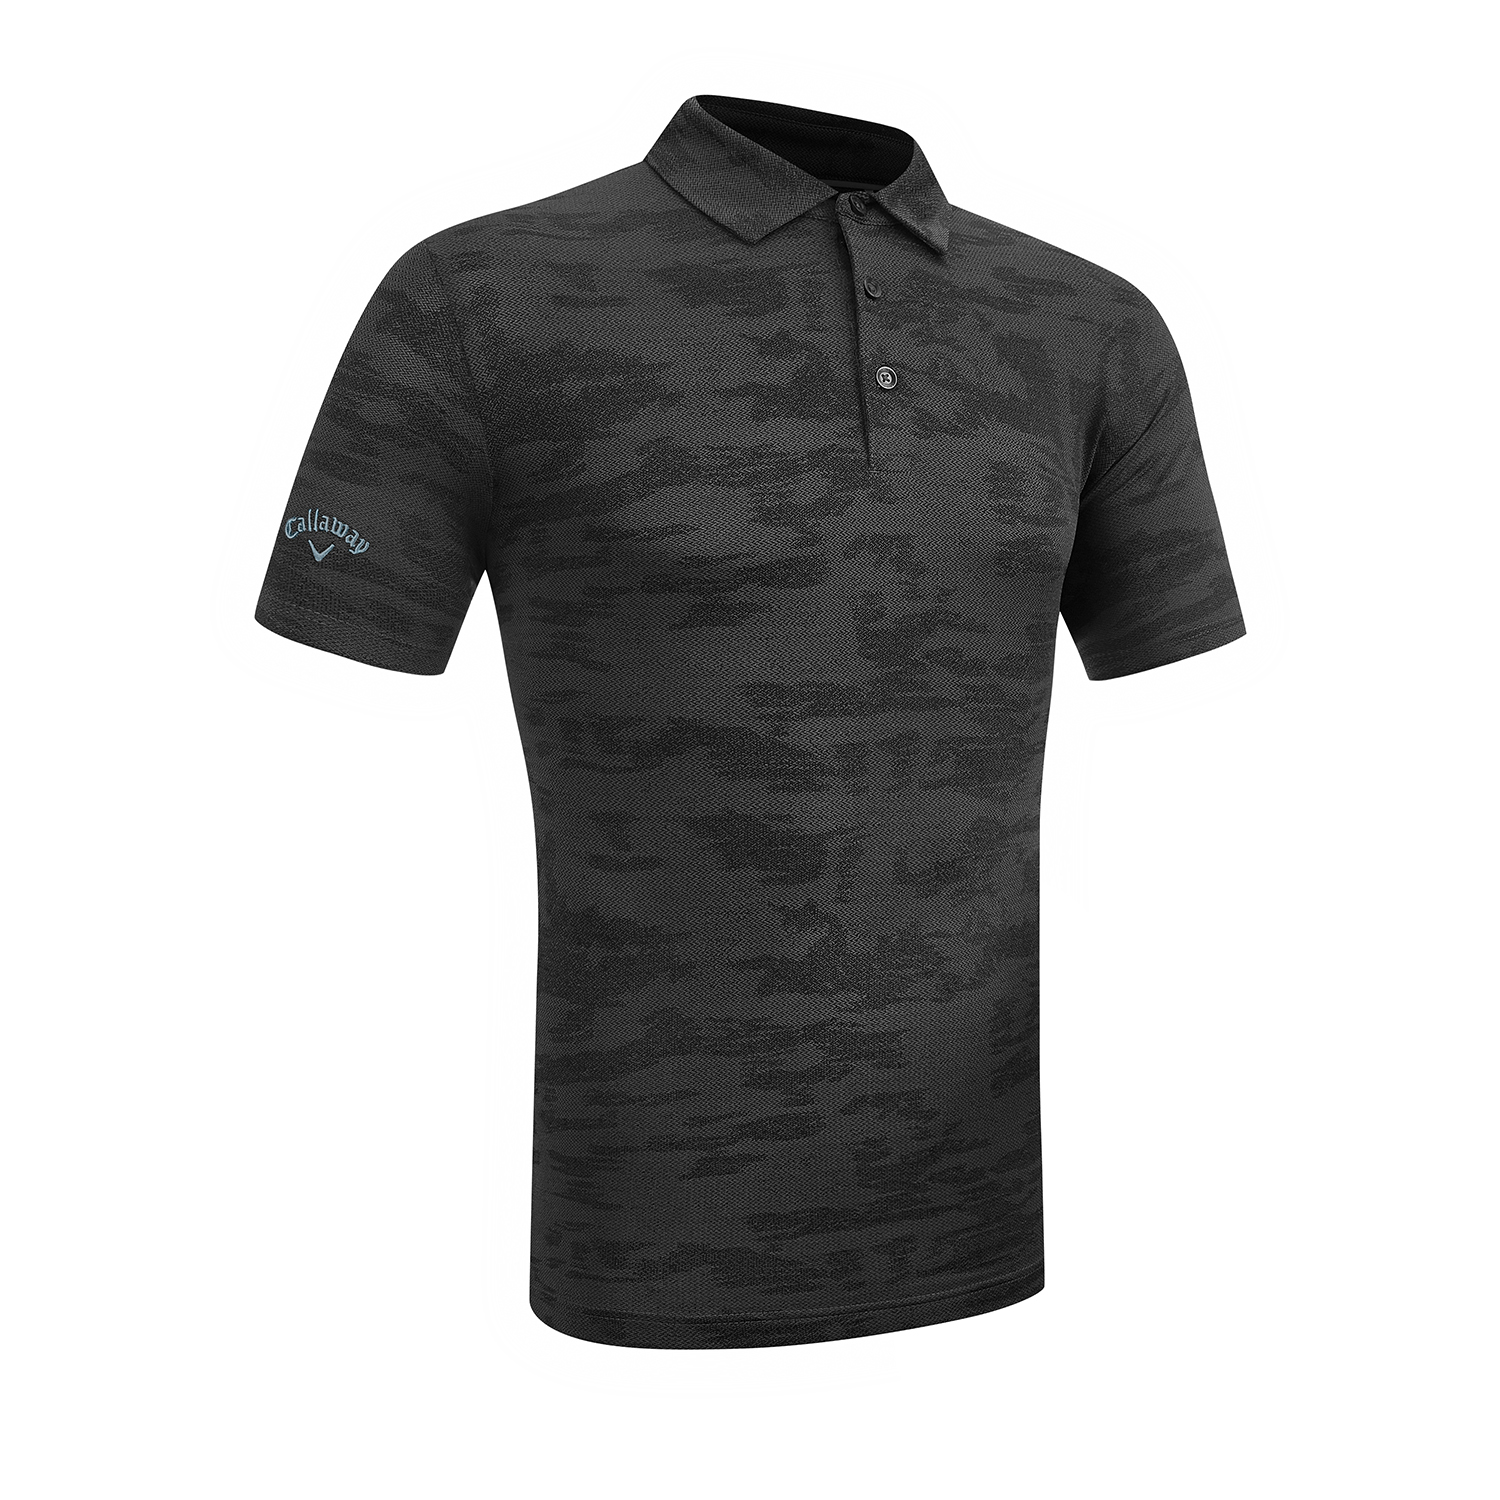 Callaway Digital Camo Jacquard Polo, Shirts from County Golf, Golf Sale, Golf Clothing